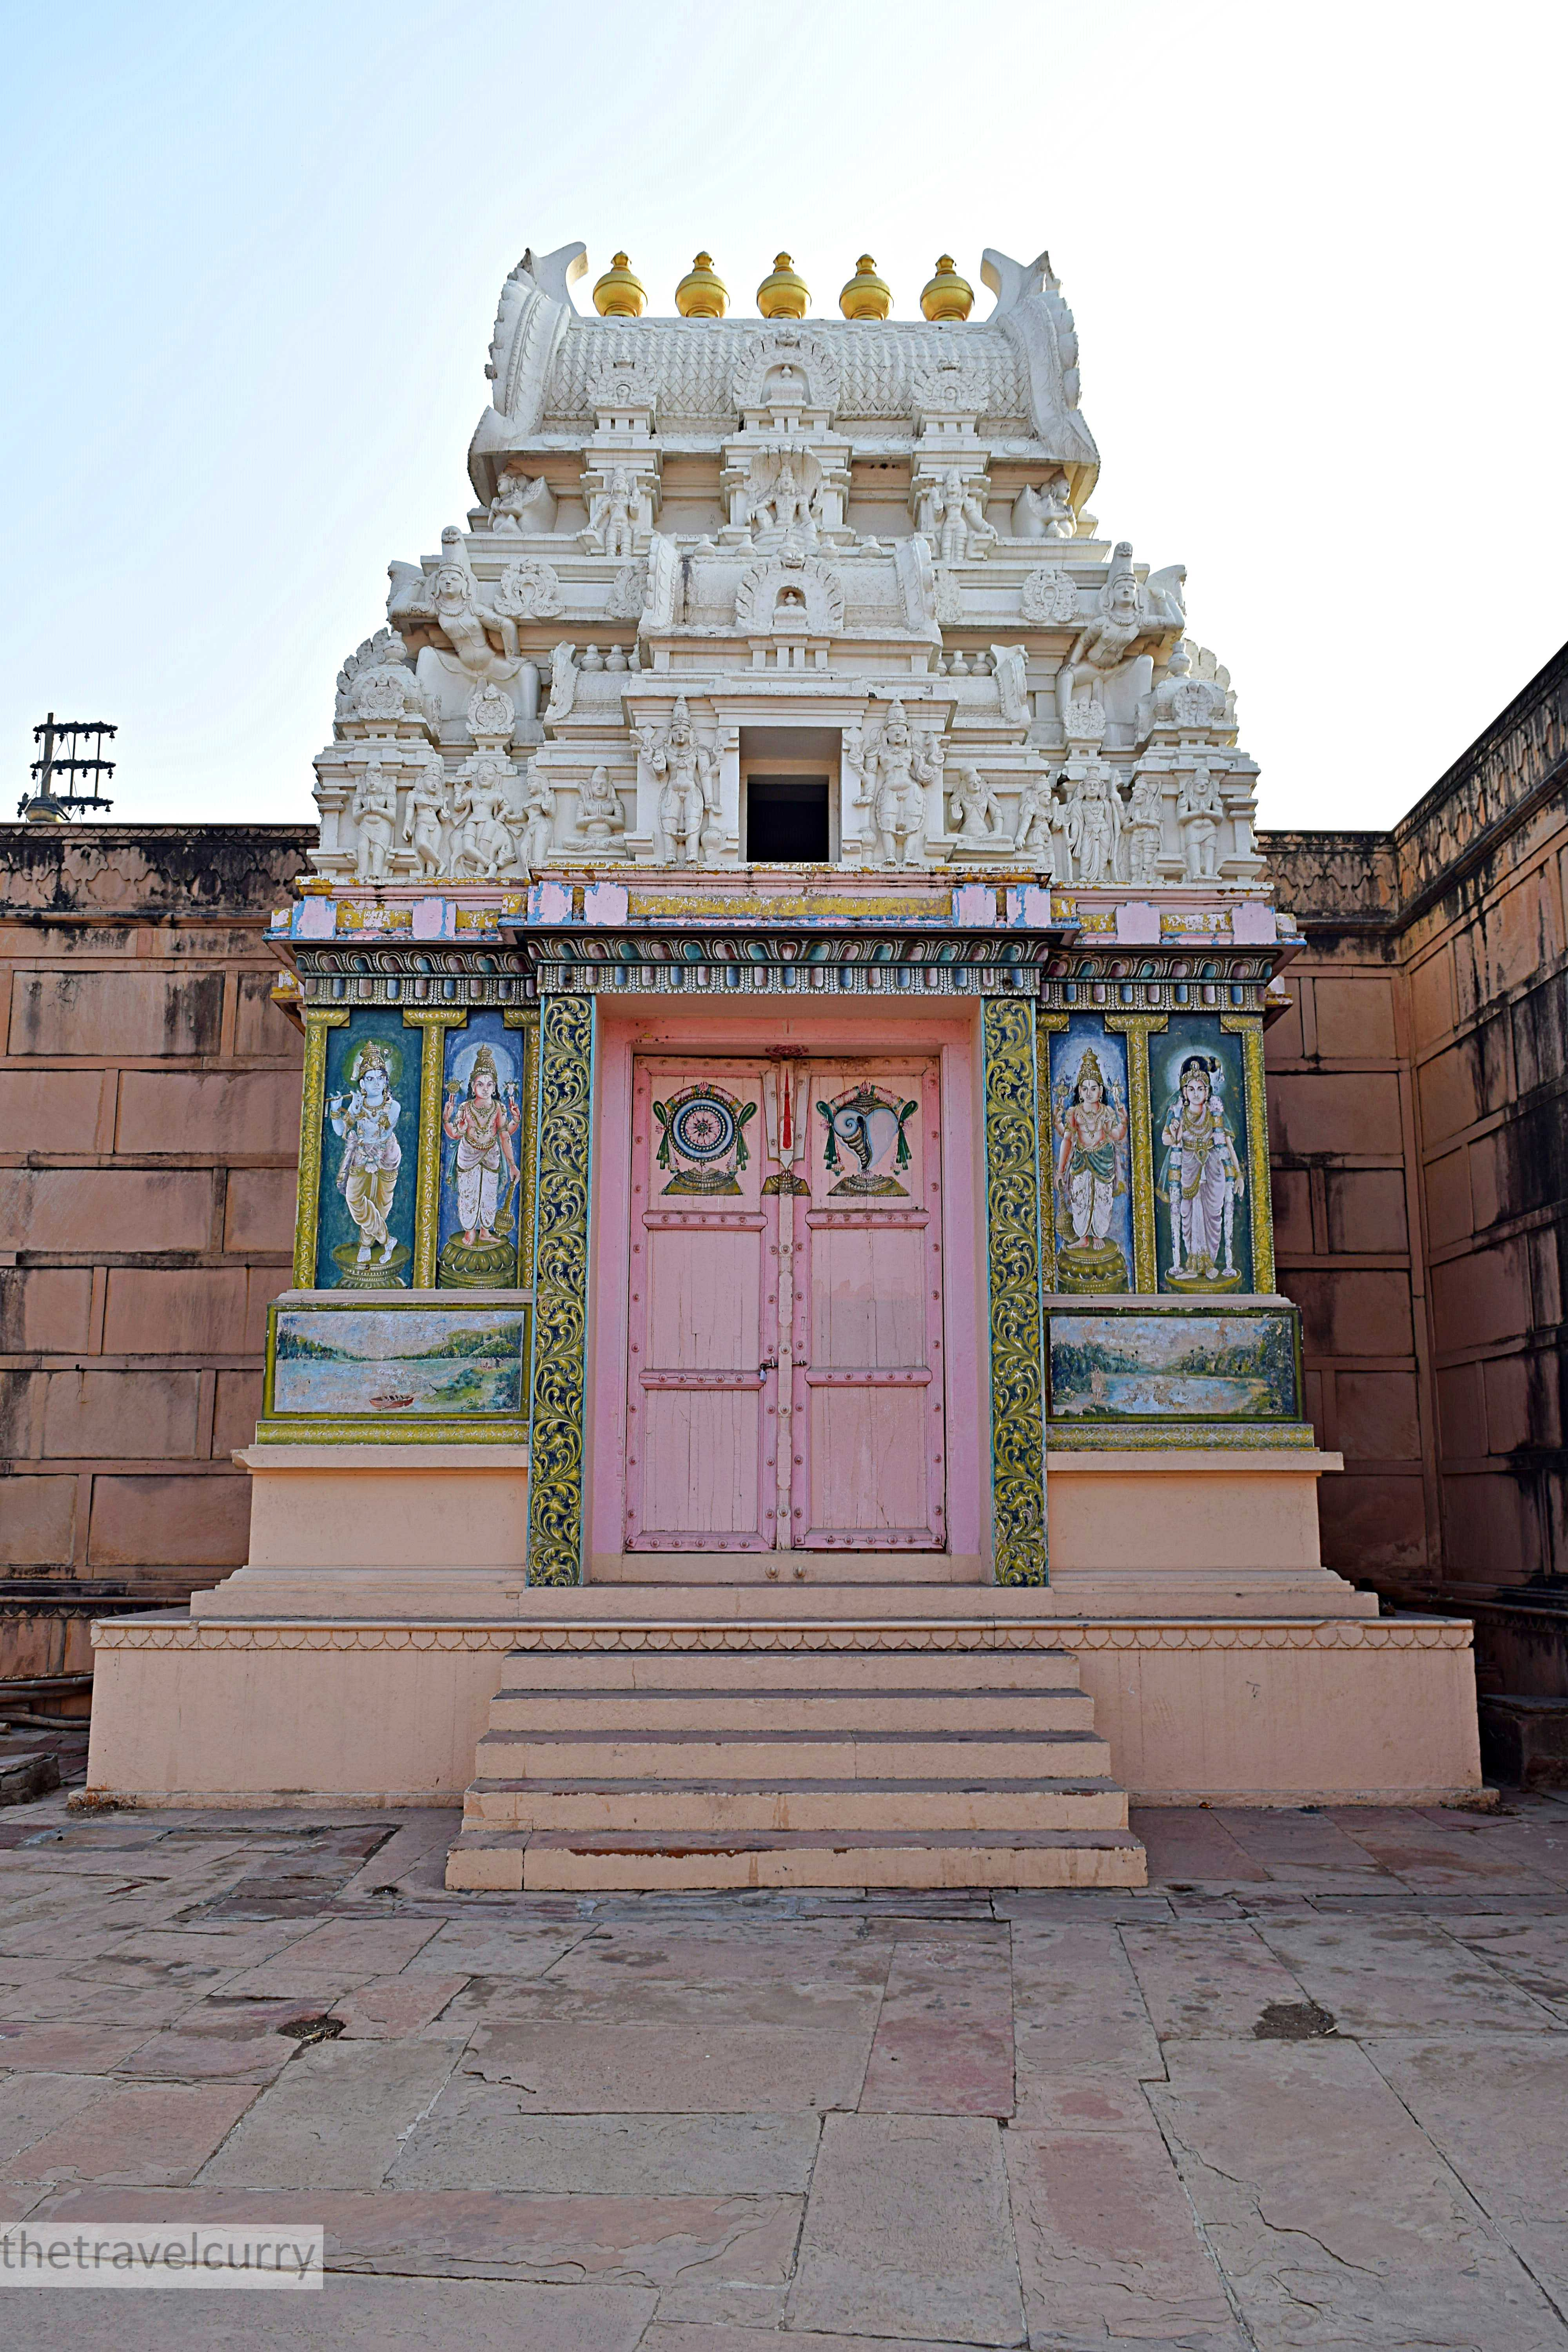 Temple dedicated to Krishna's avatars